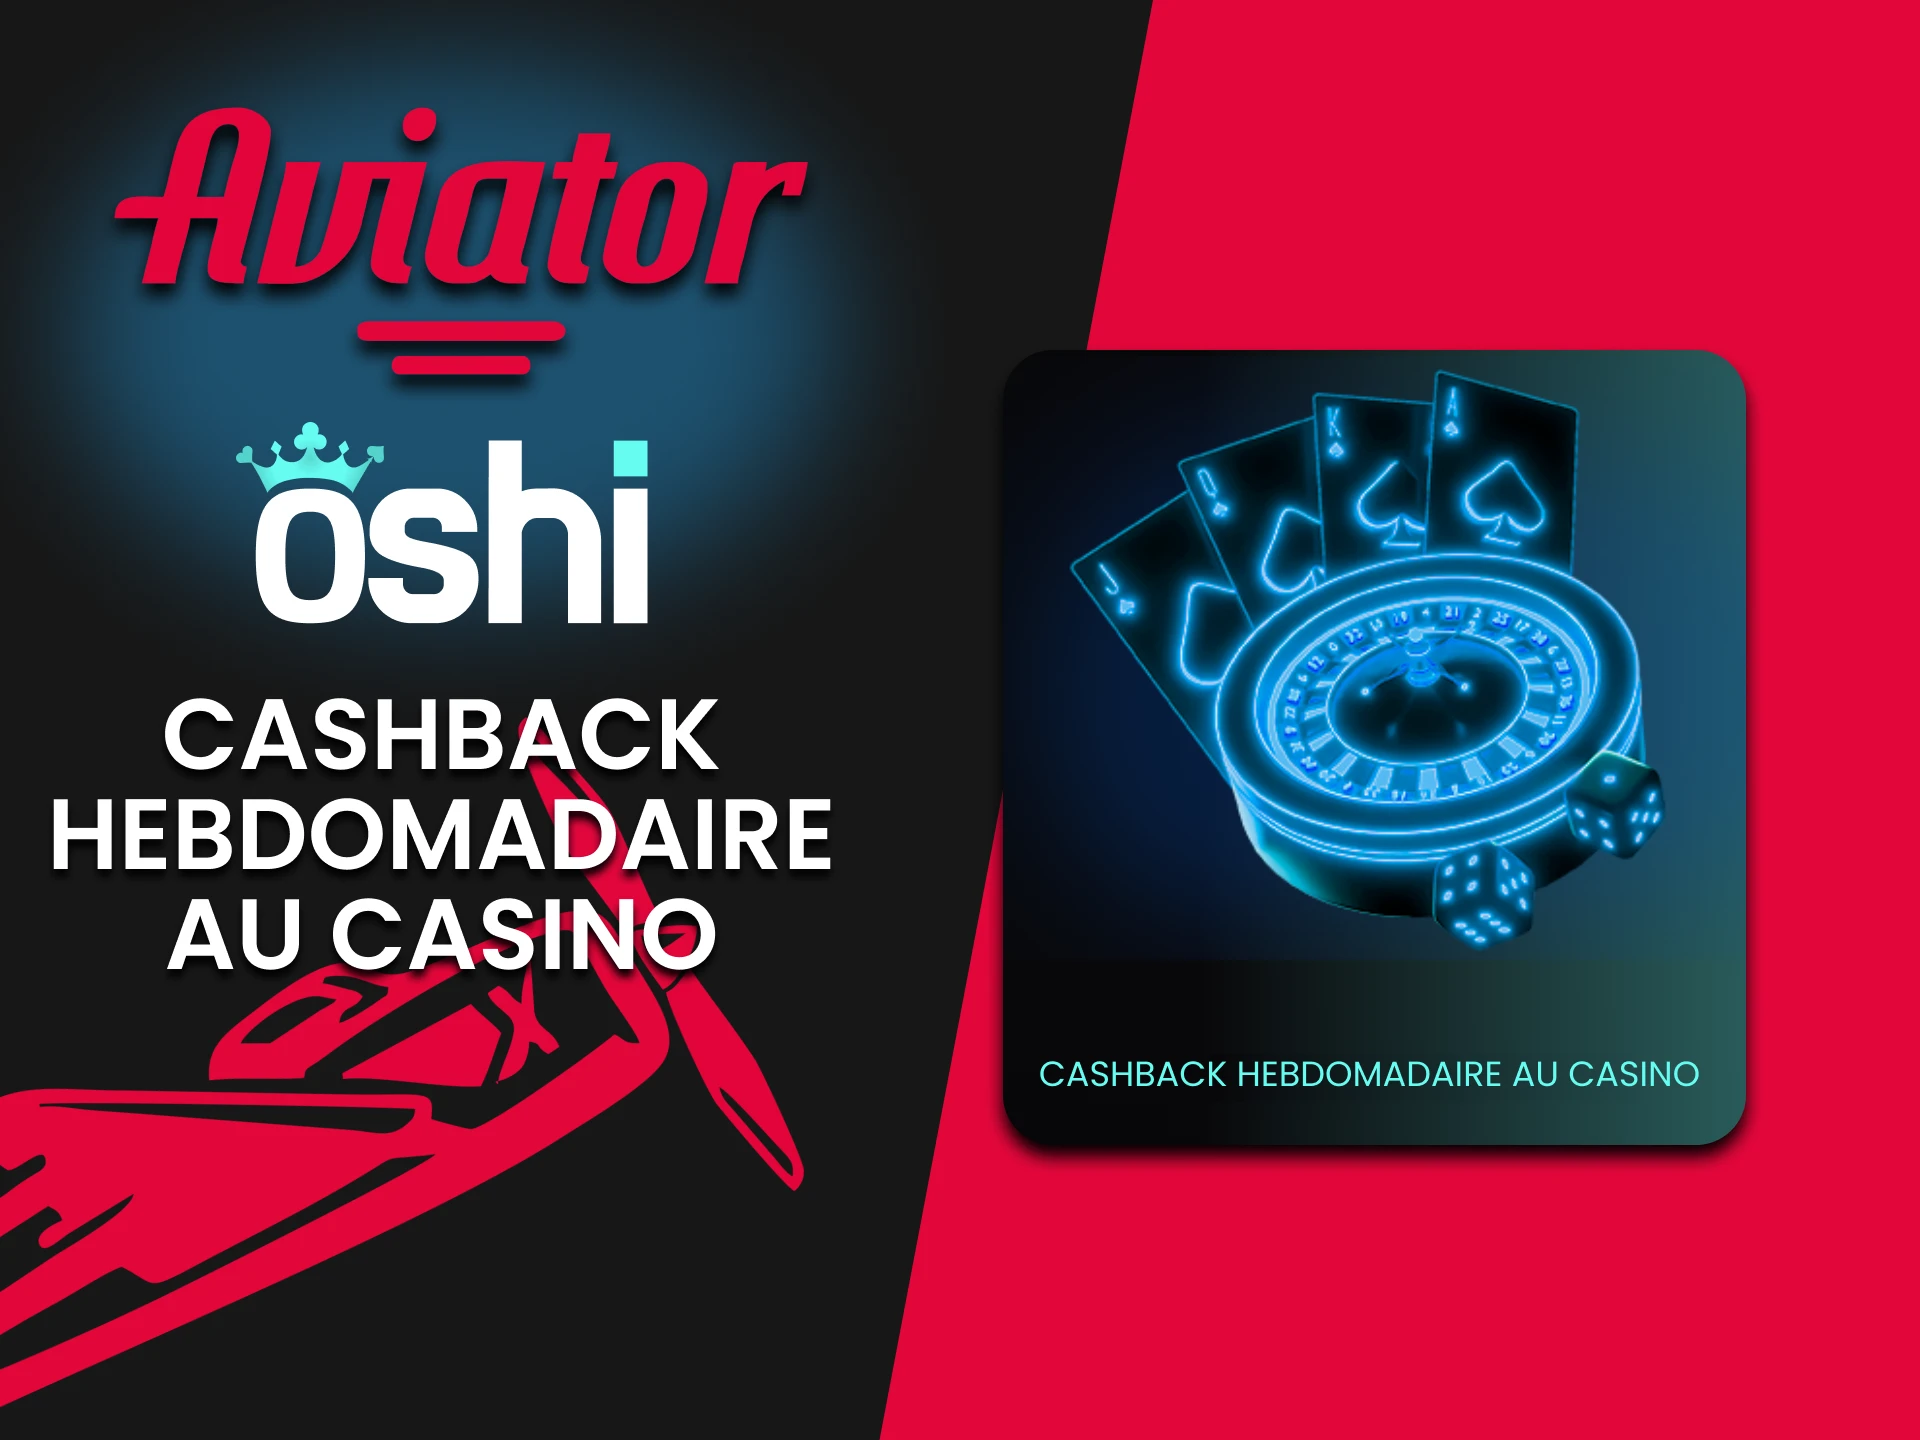 Oshi Casino donne du cashback au casino.